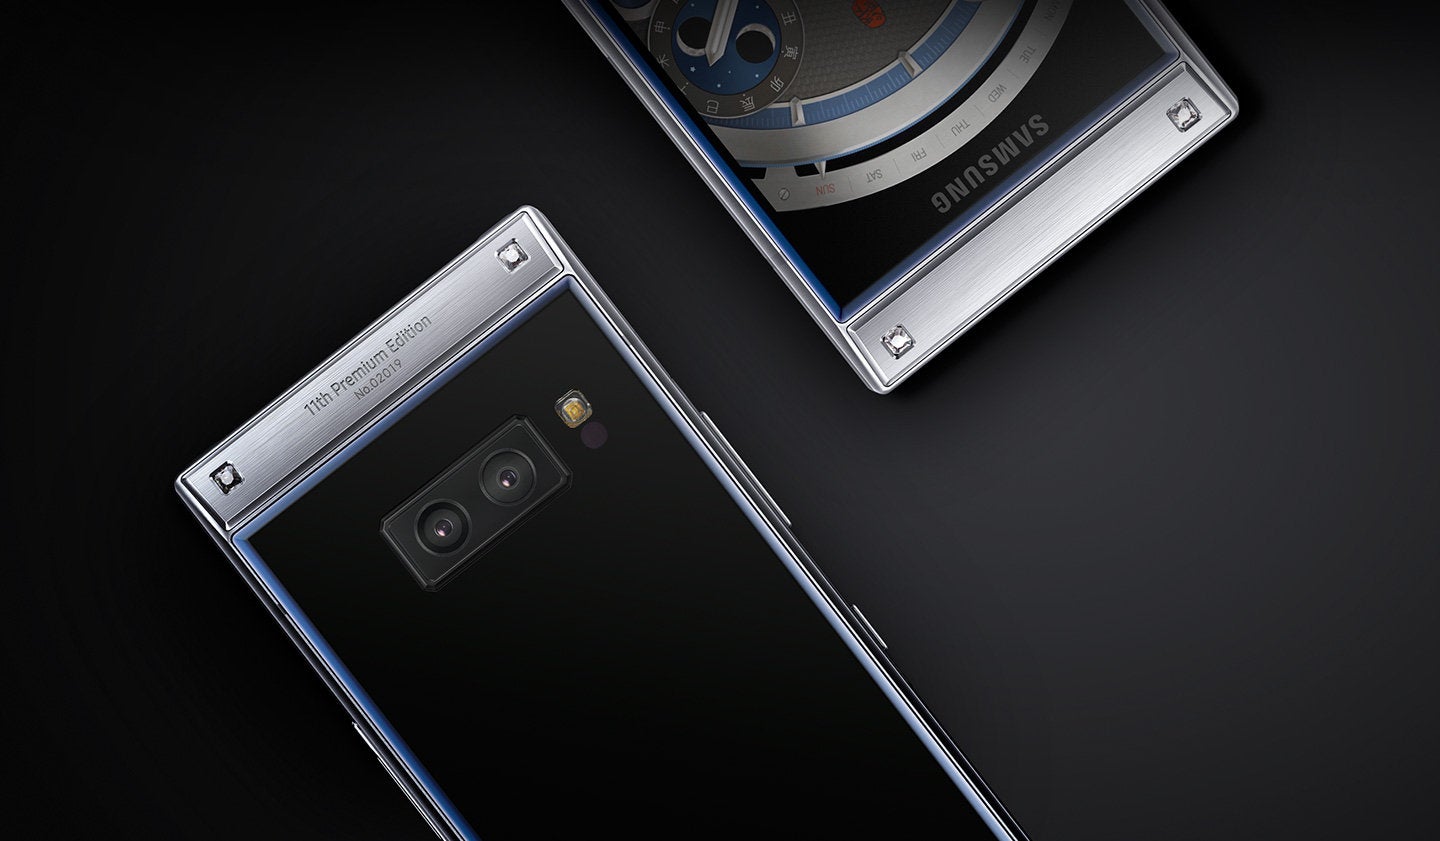 Samsung W2019 Premium Edition press image